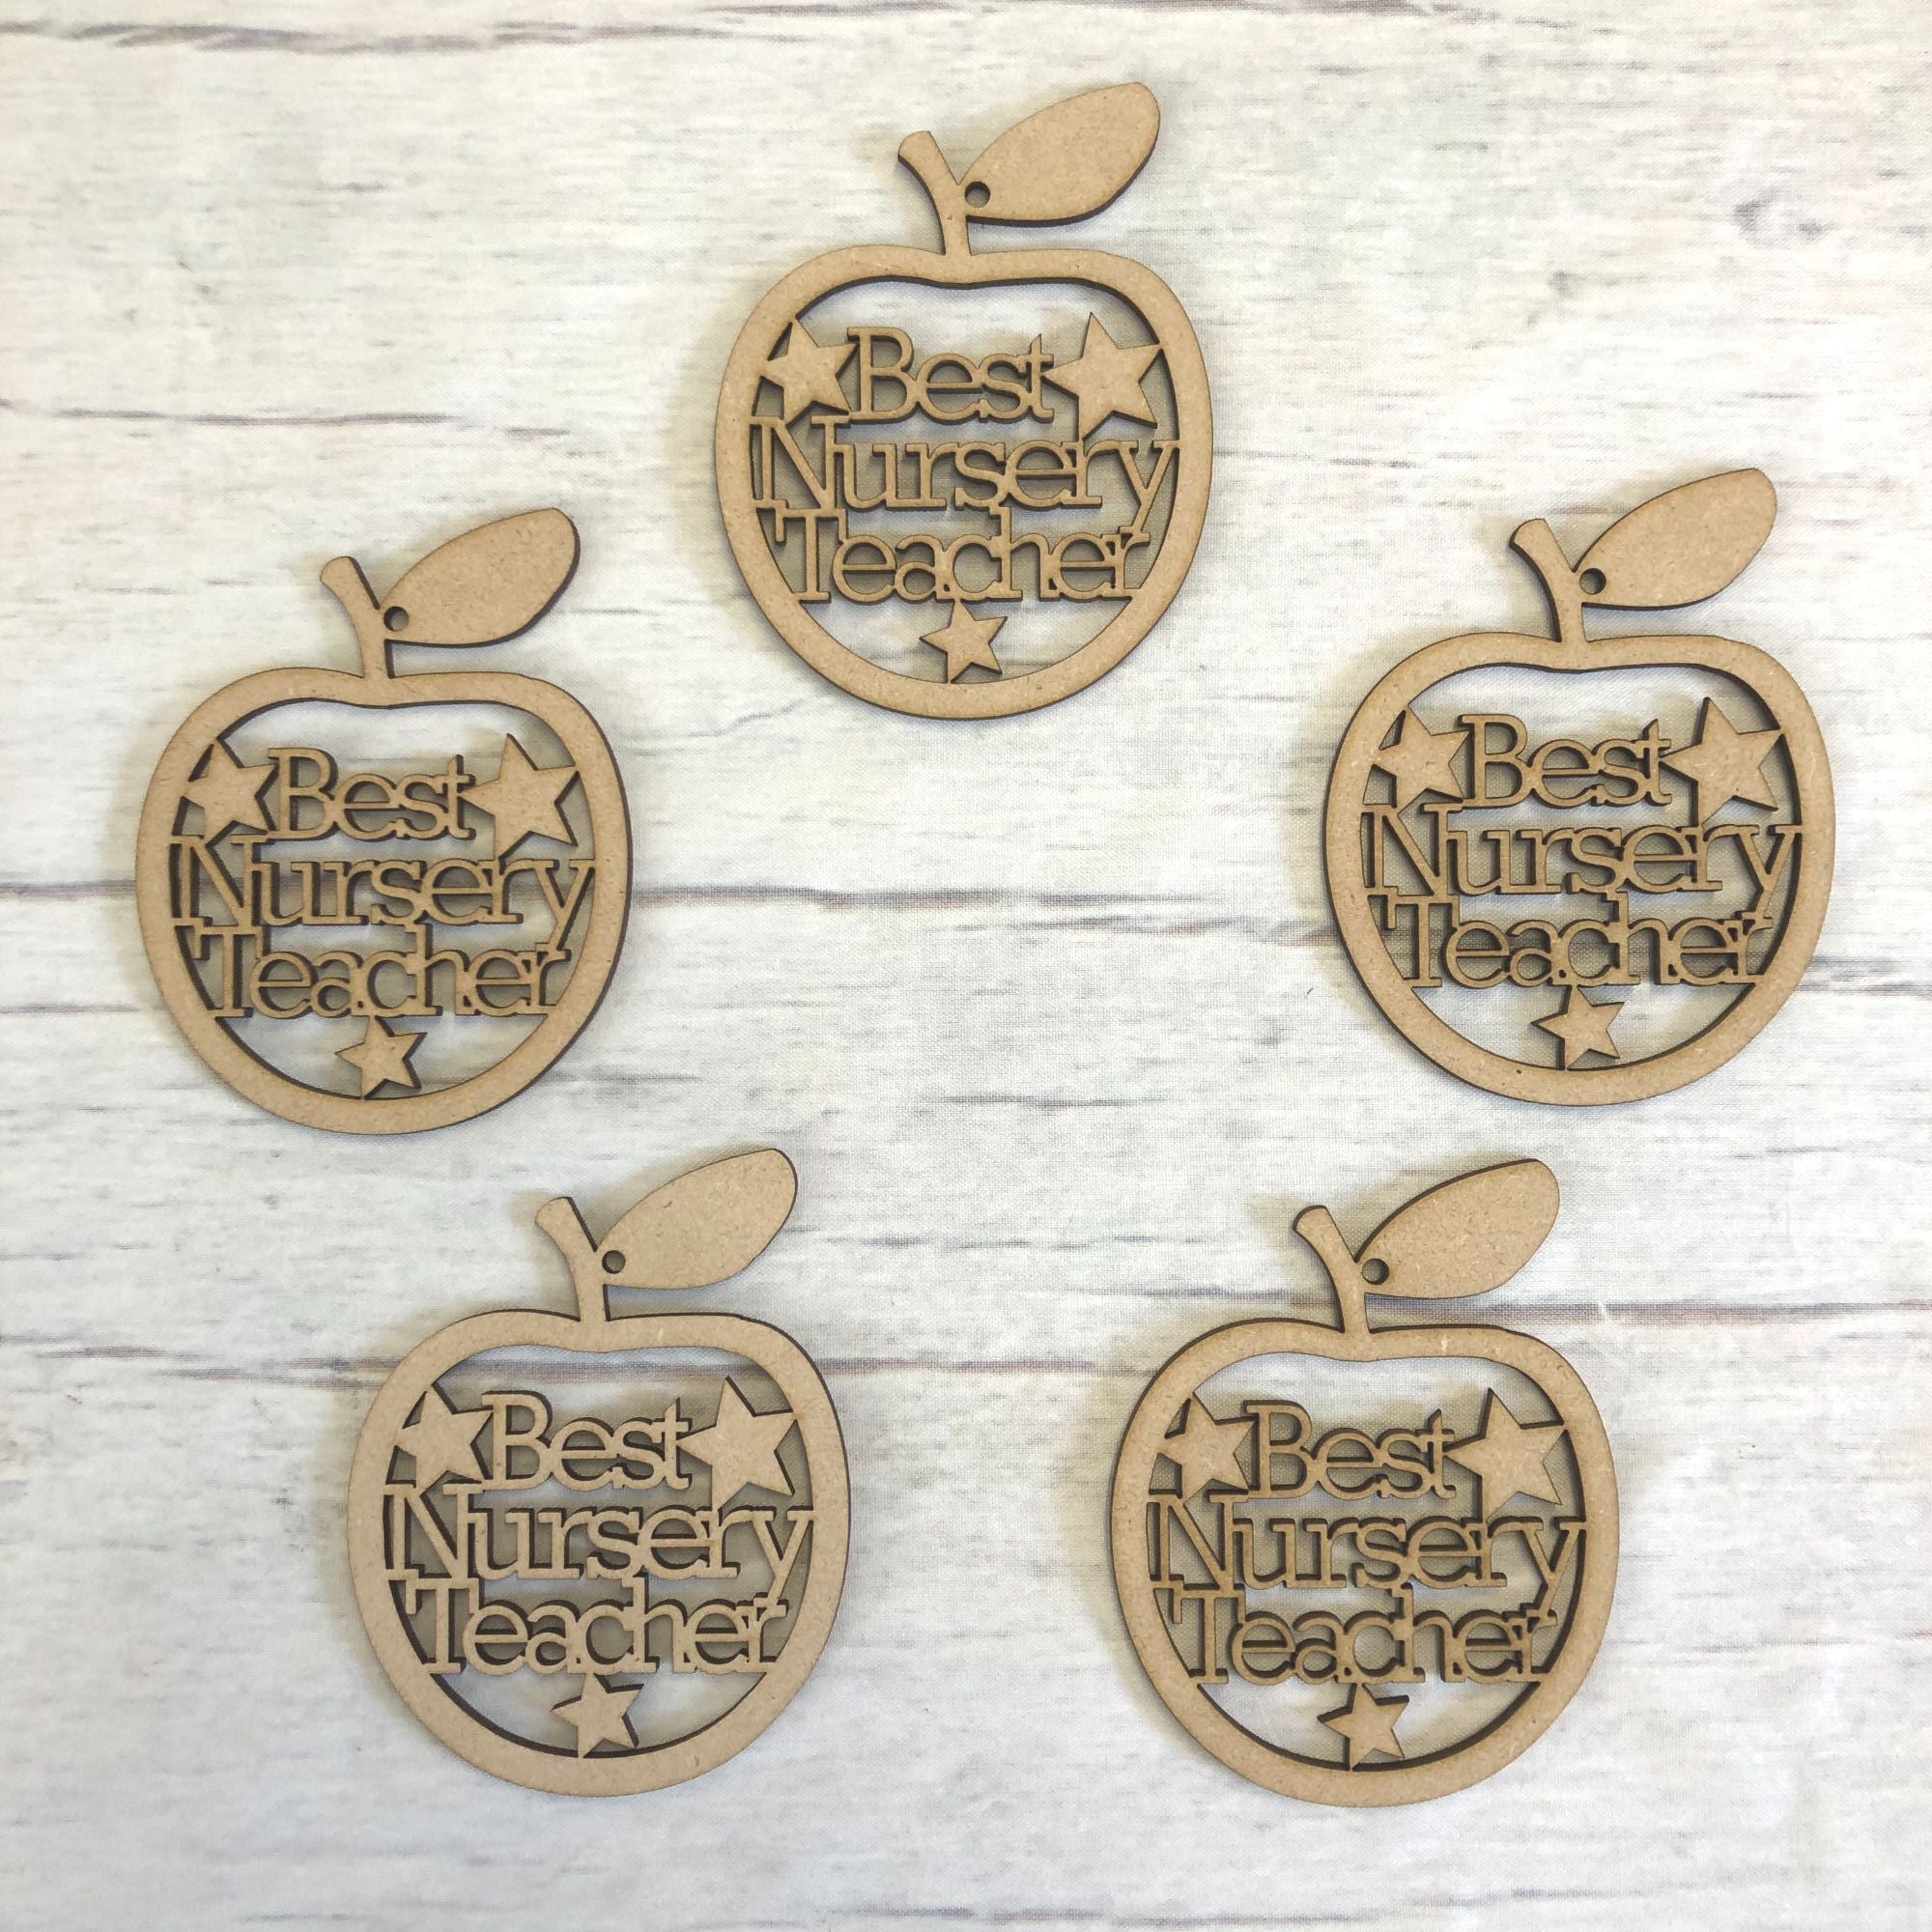 Best Nursery Teacher apple hangers - set of 5